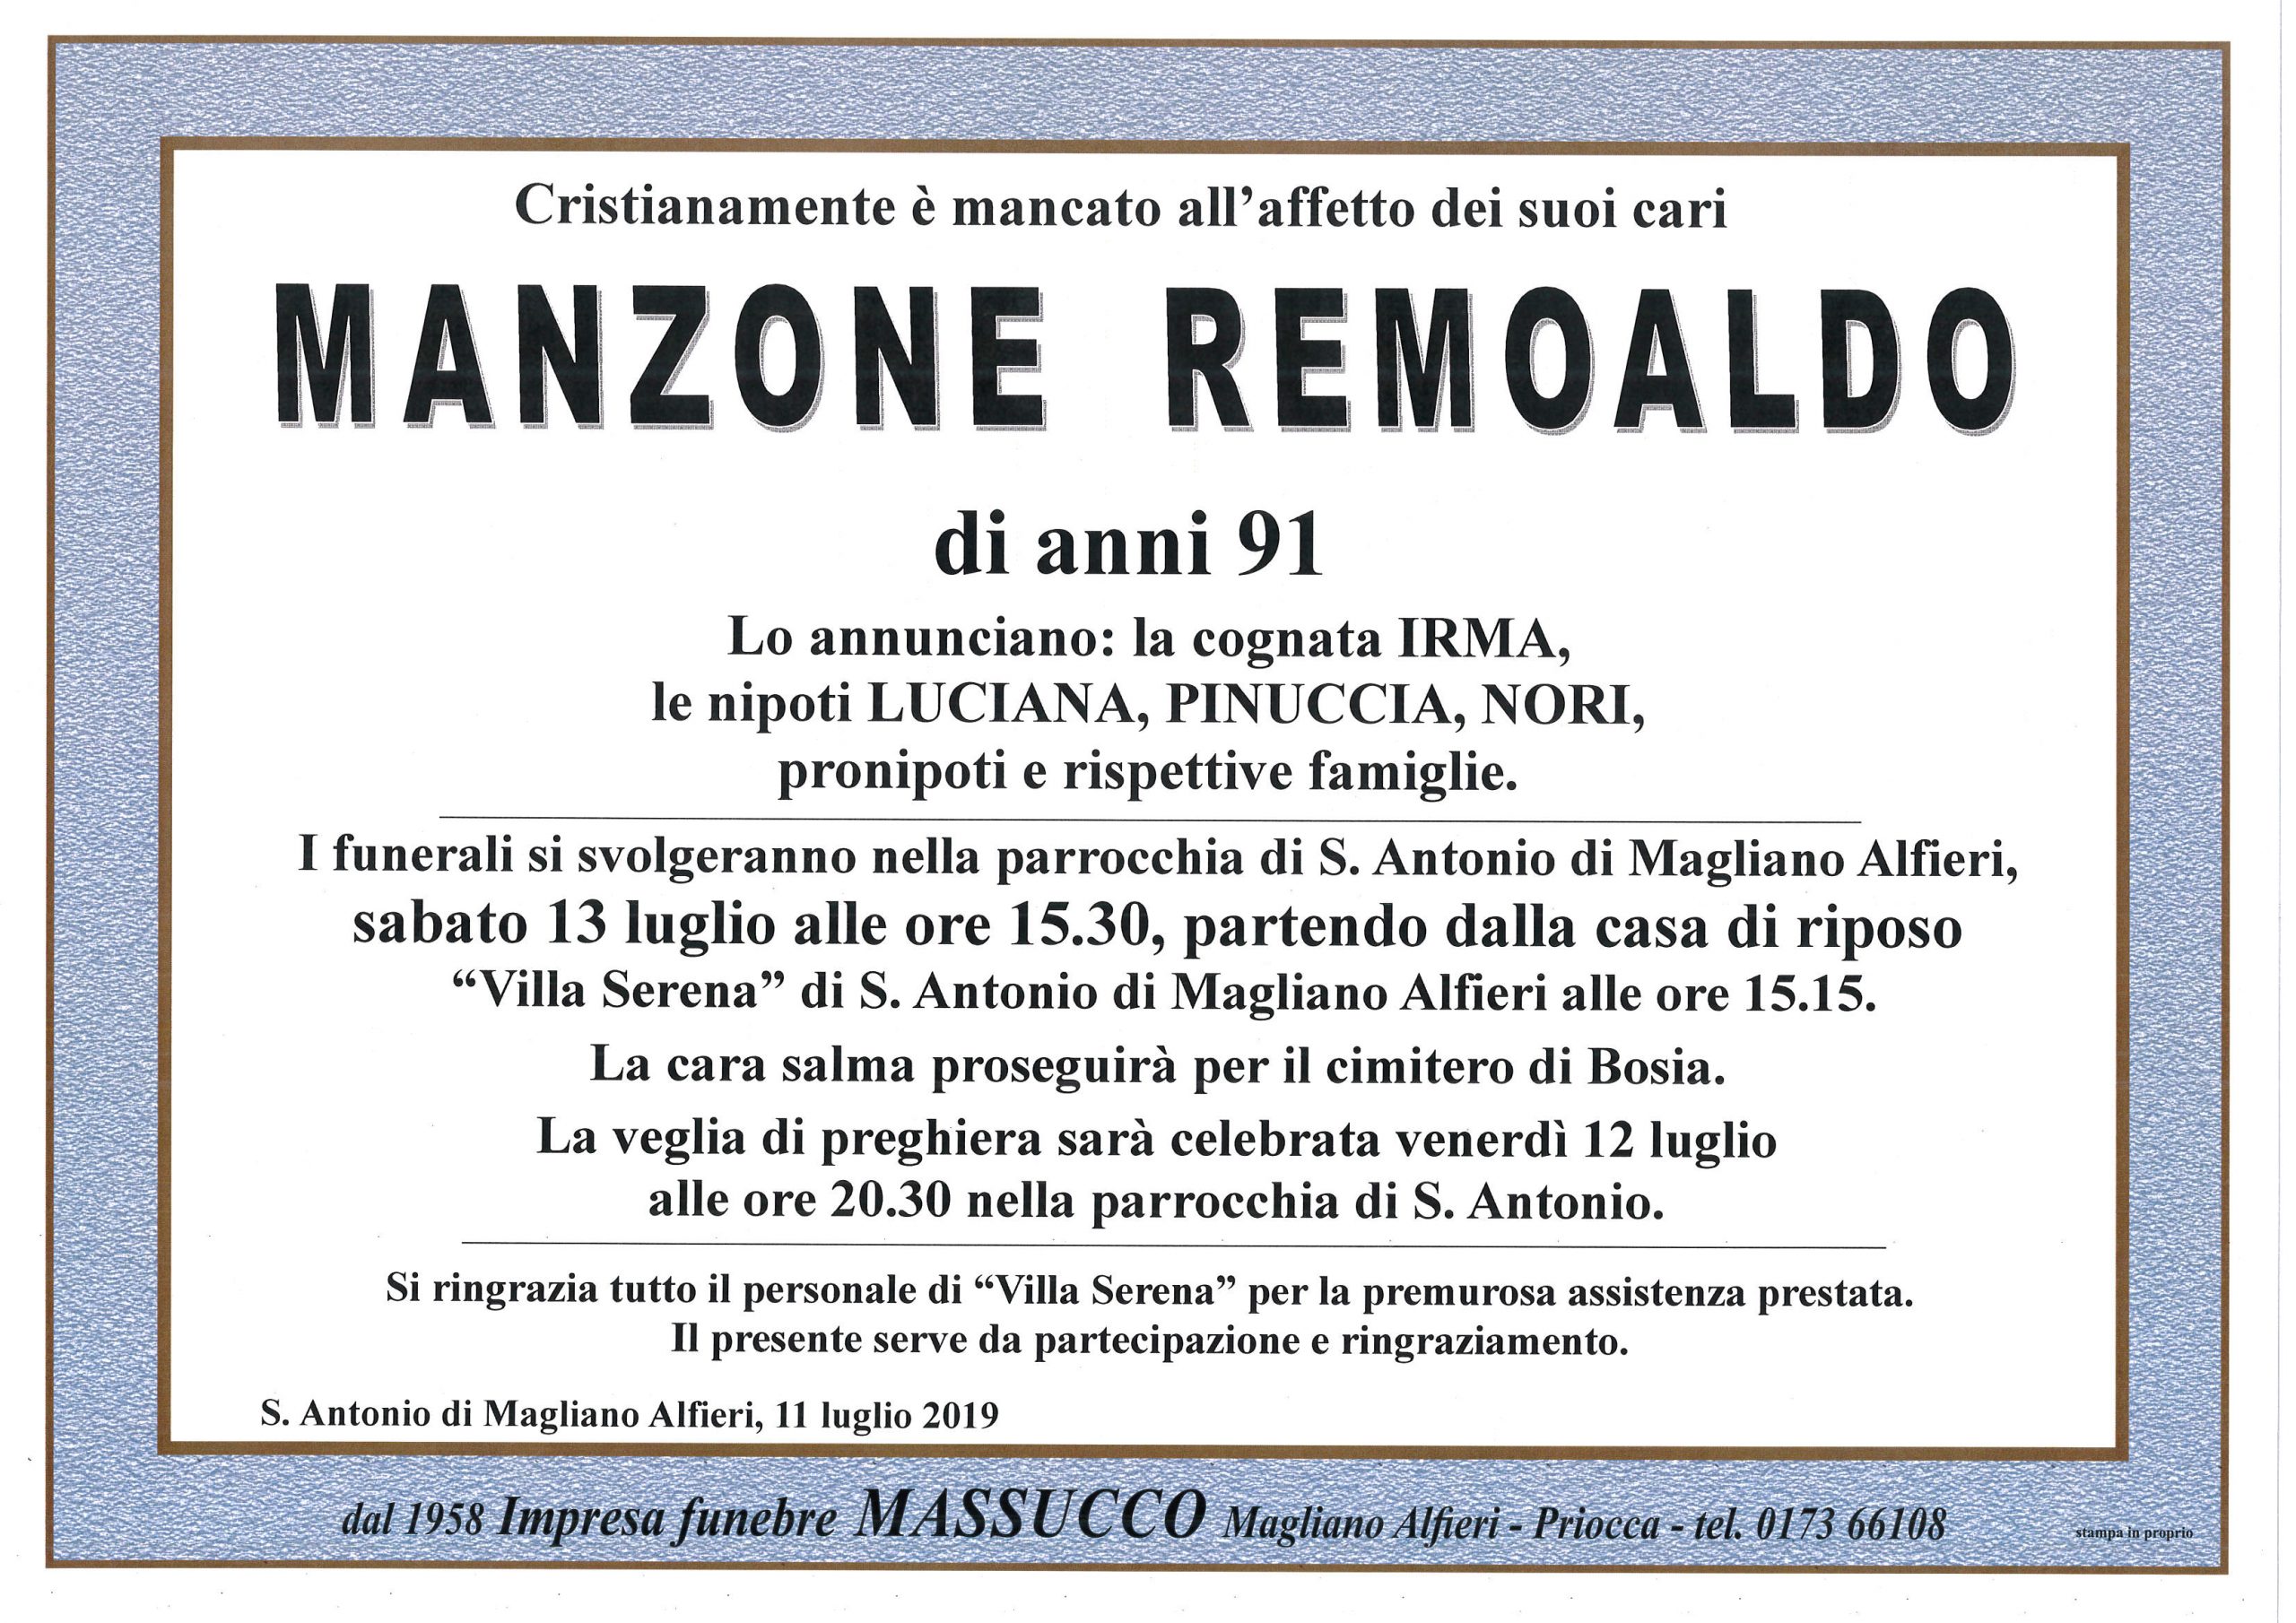 Remoaldo Manzone